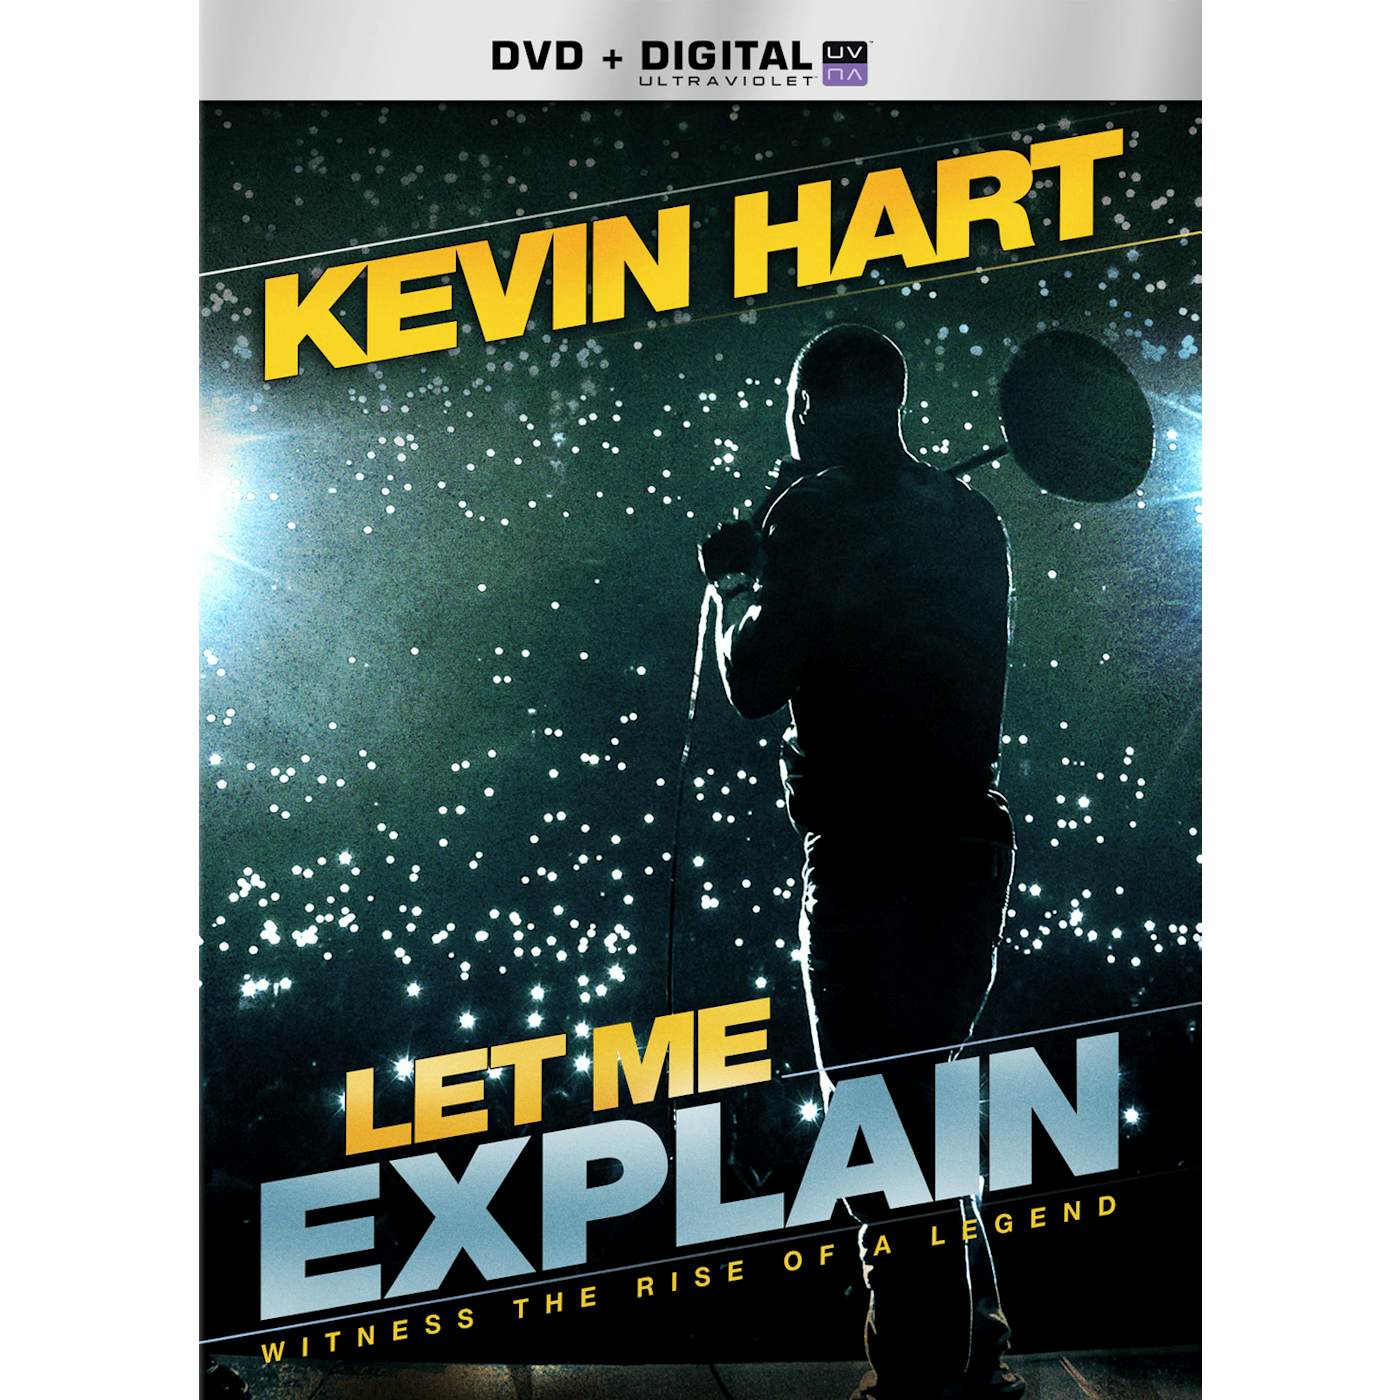 Kevin Hart LET ME EXPLAIN DVD